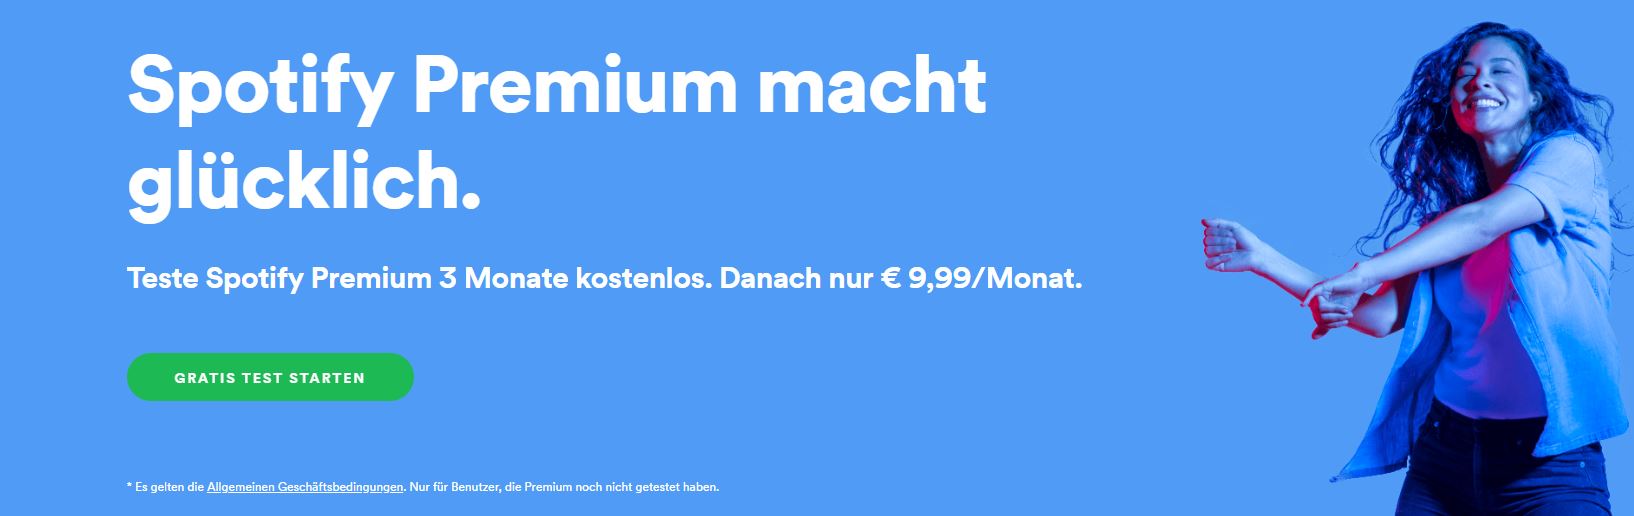 🎶 12 Monate Spotify Premium für 99€ (statt 119€) - MyTopDeals